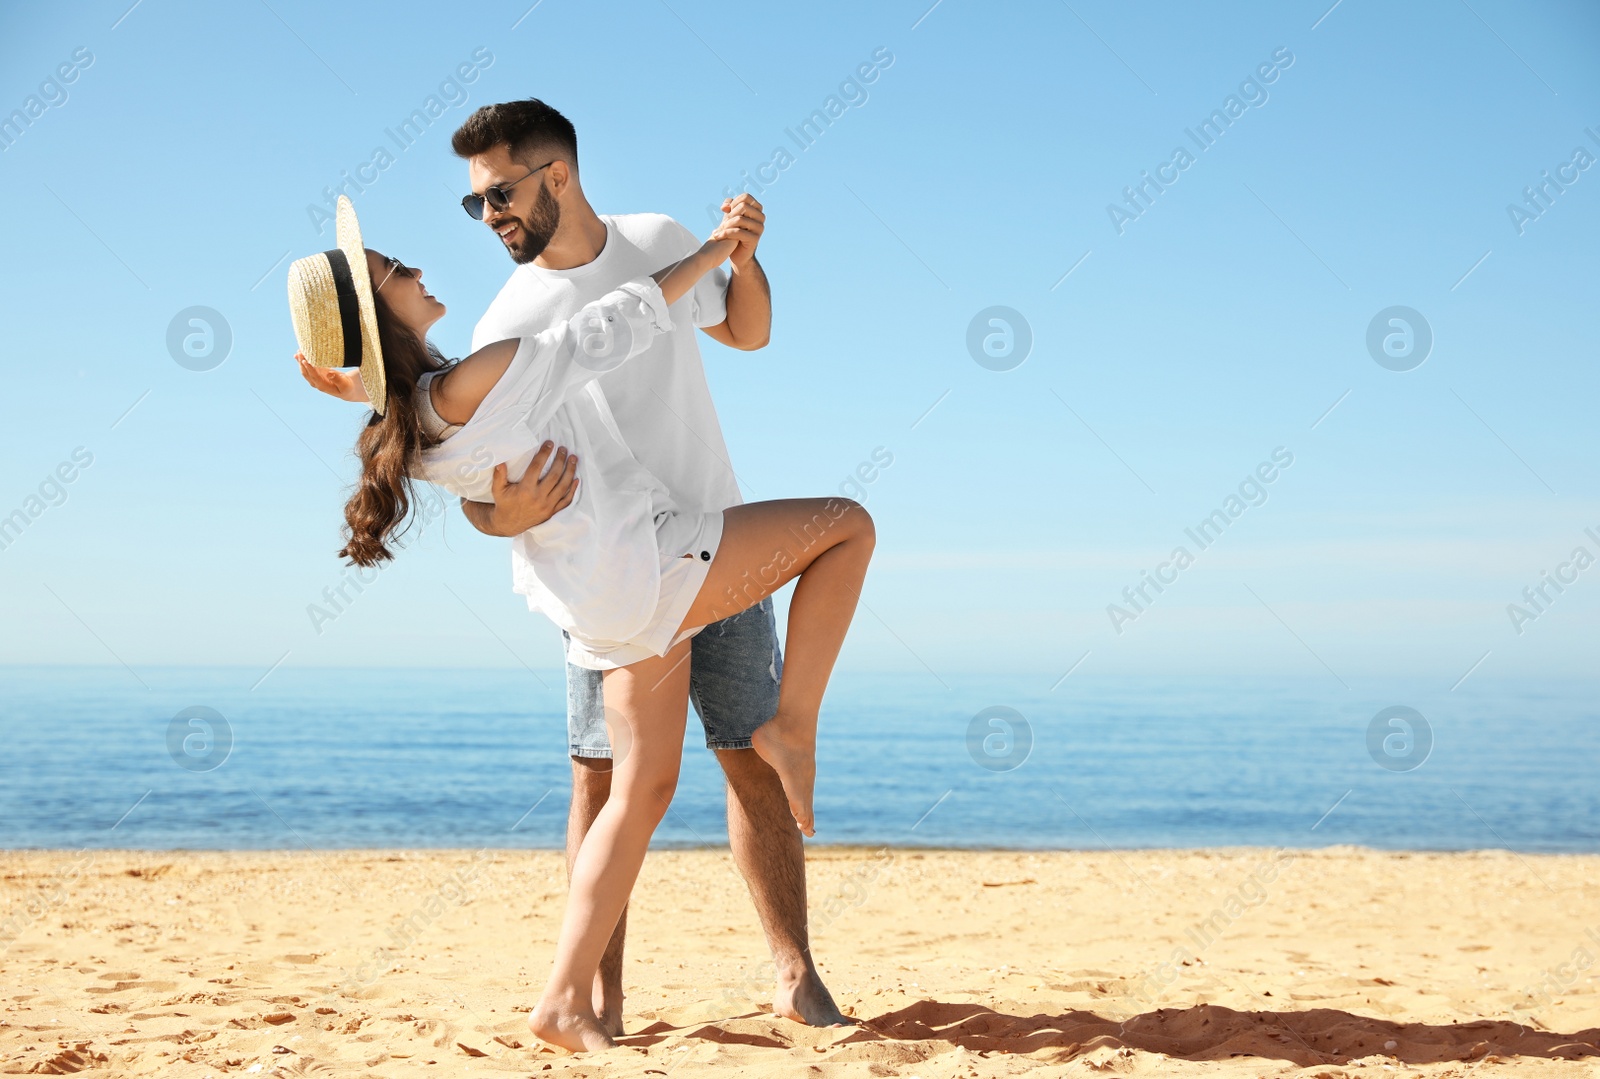 Photo of Happy young couple dancing on beach near sea. Honeymoon trip